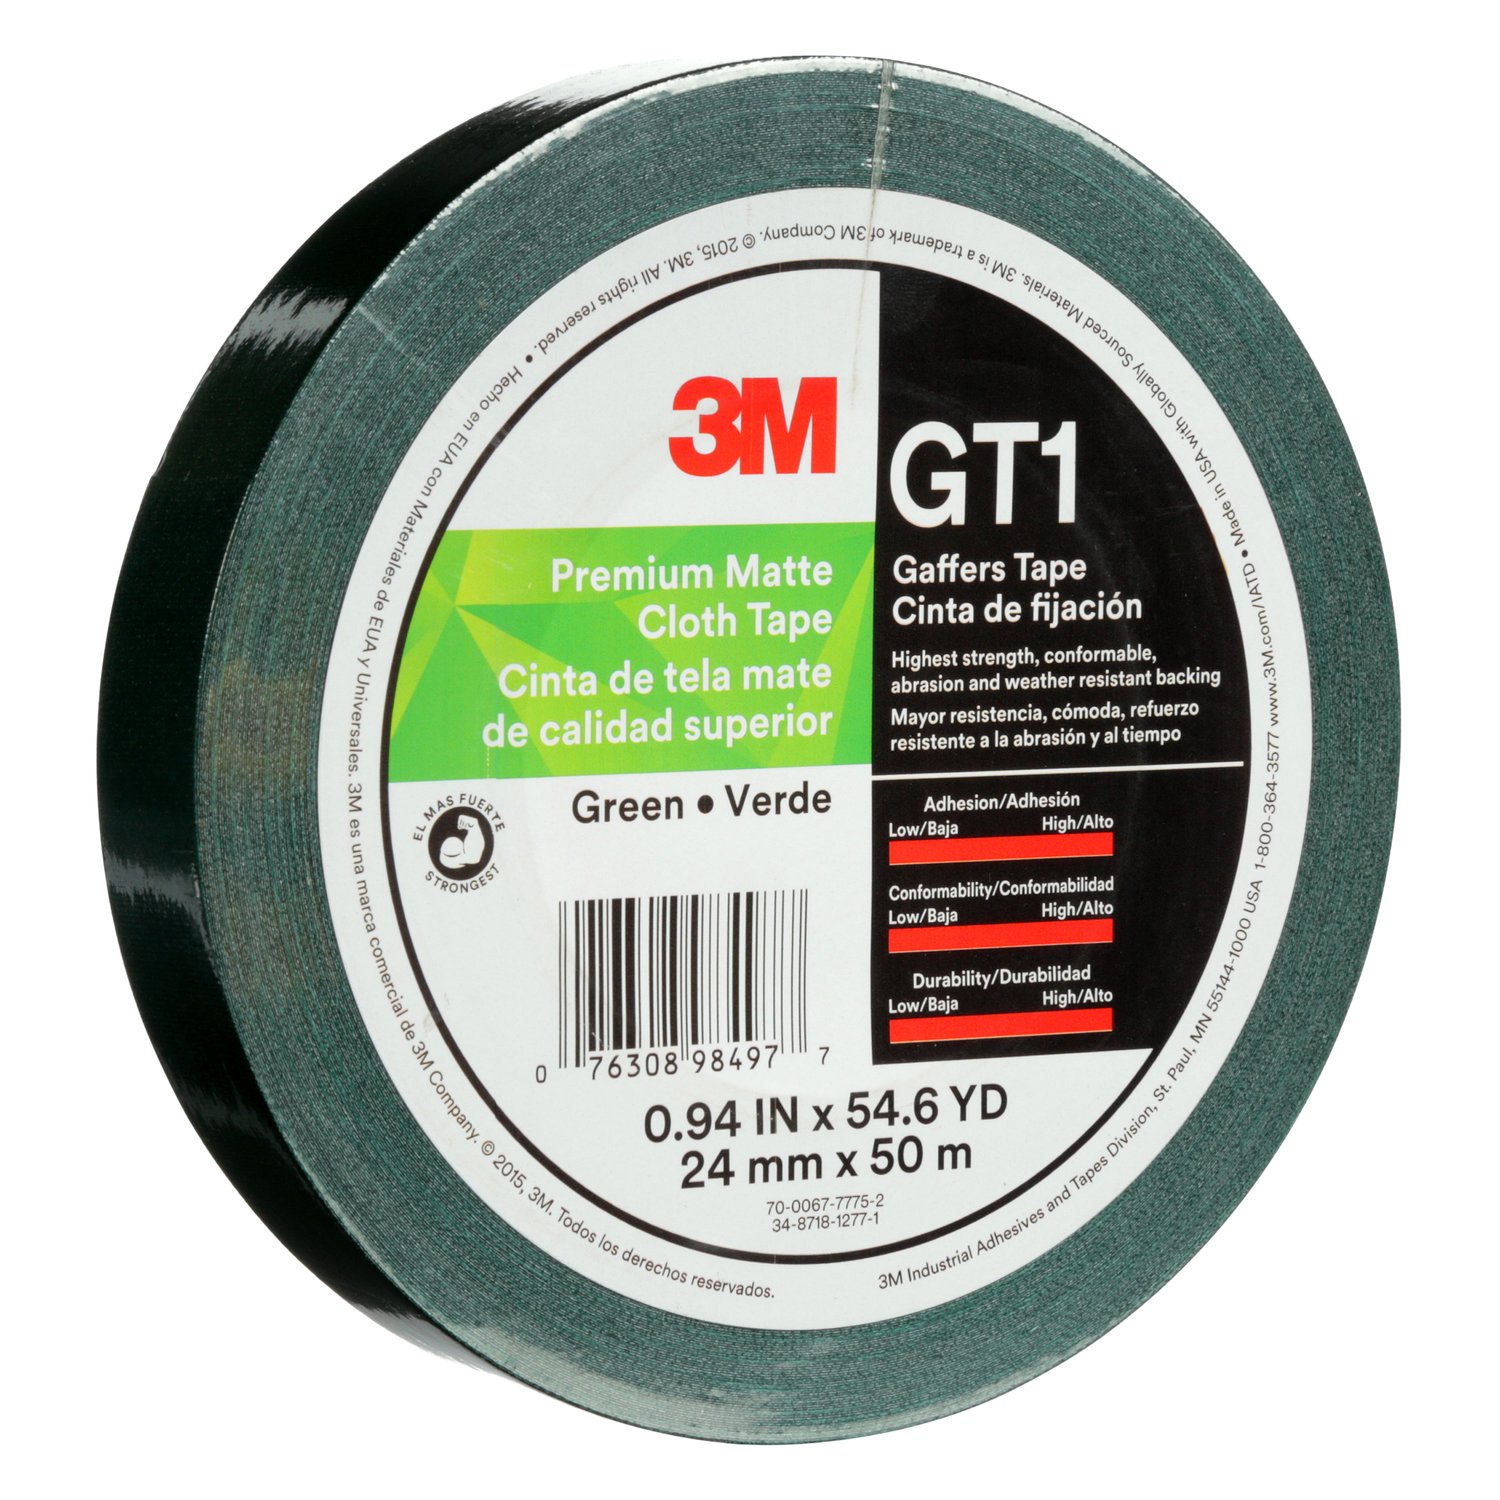 7010336127 - 3M Premium Matte Cloth (Gaffers) Tape GT1, Green, 24 mm x 50 m, 11 mil,
48/Case